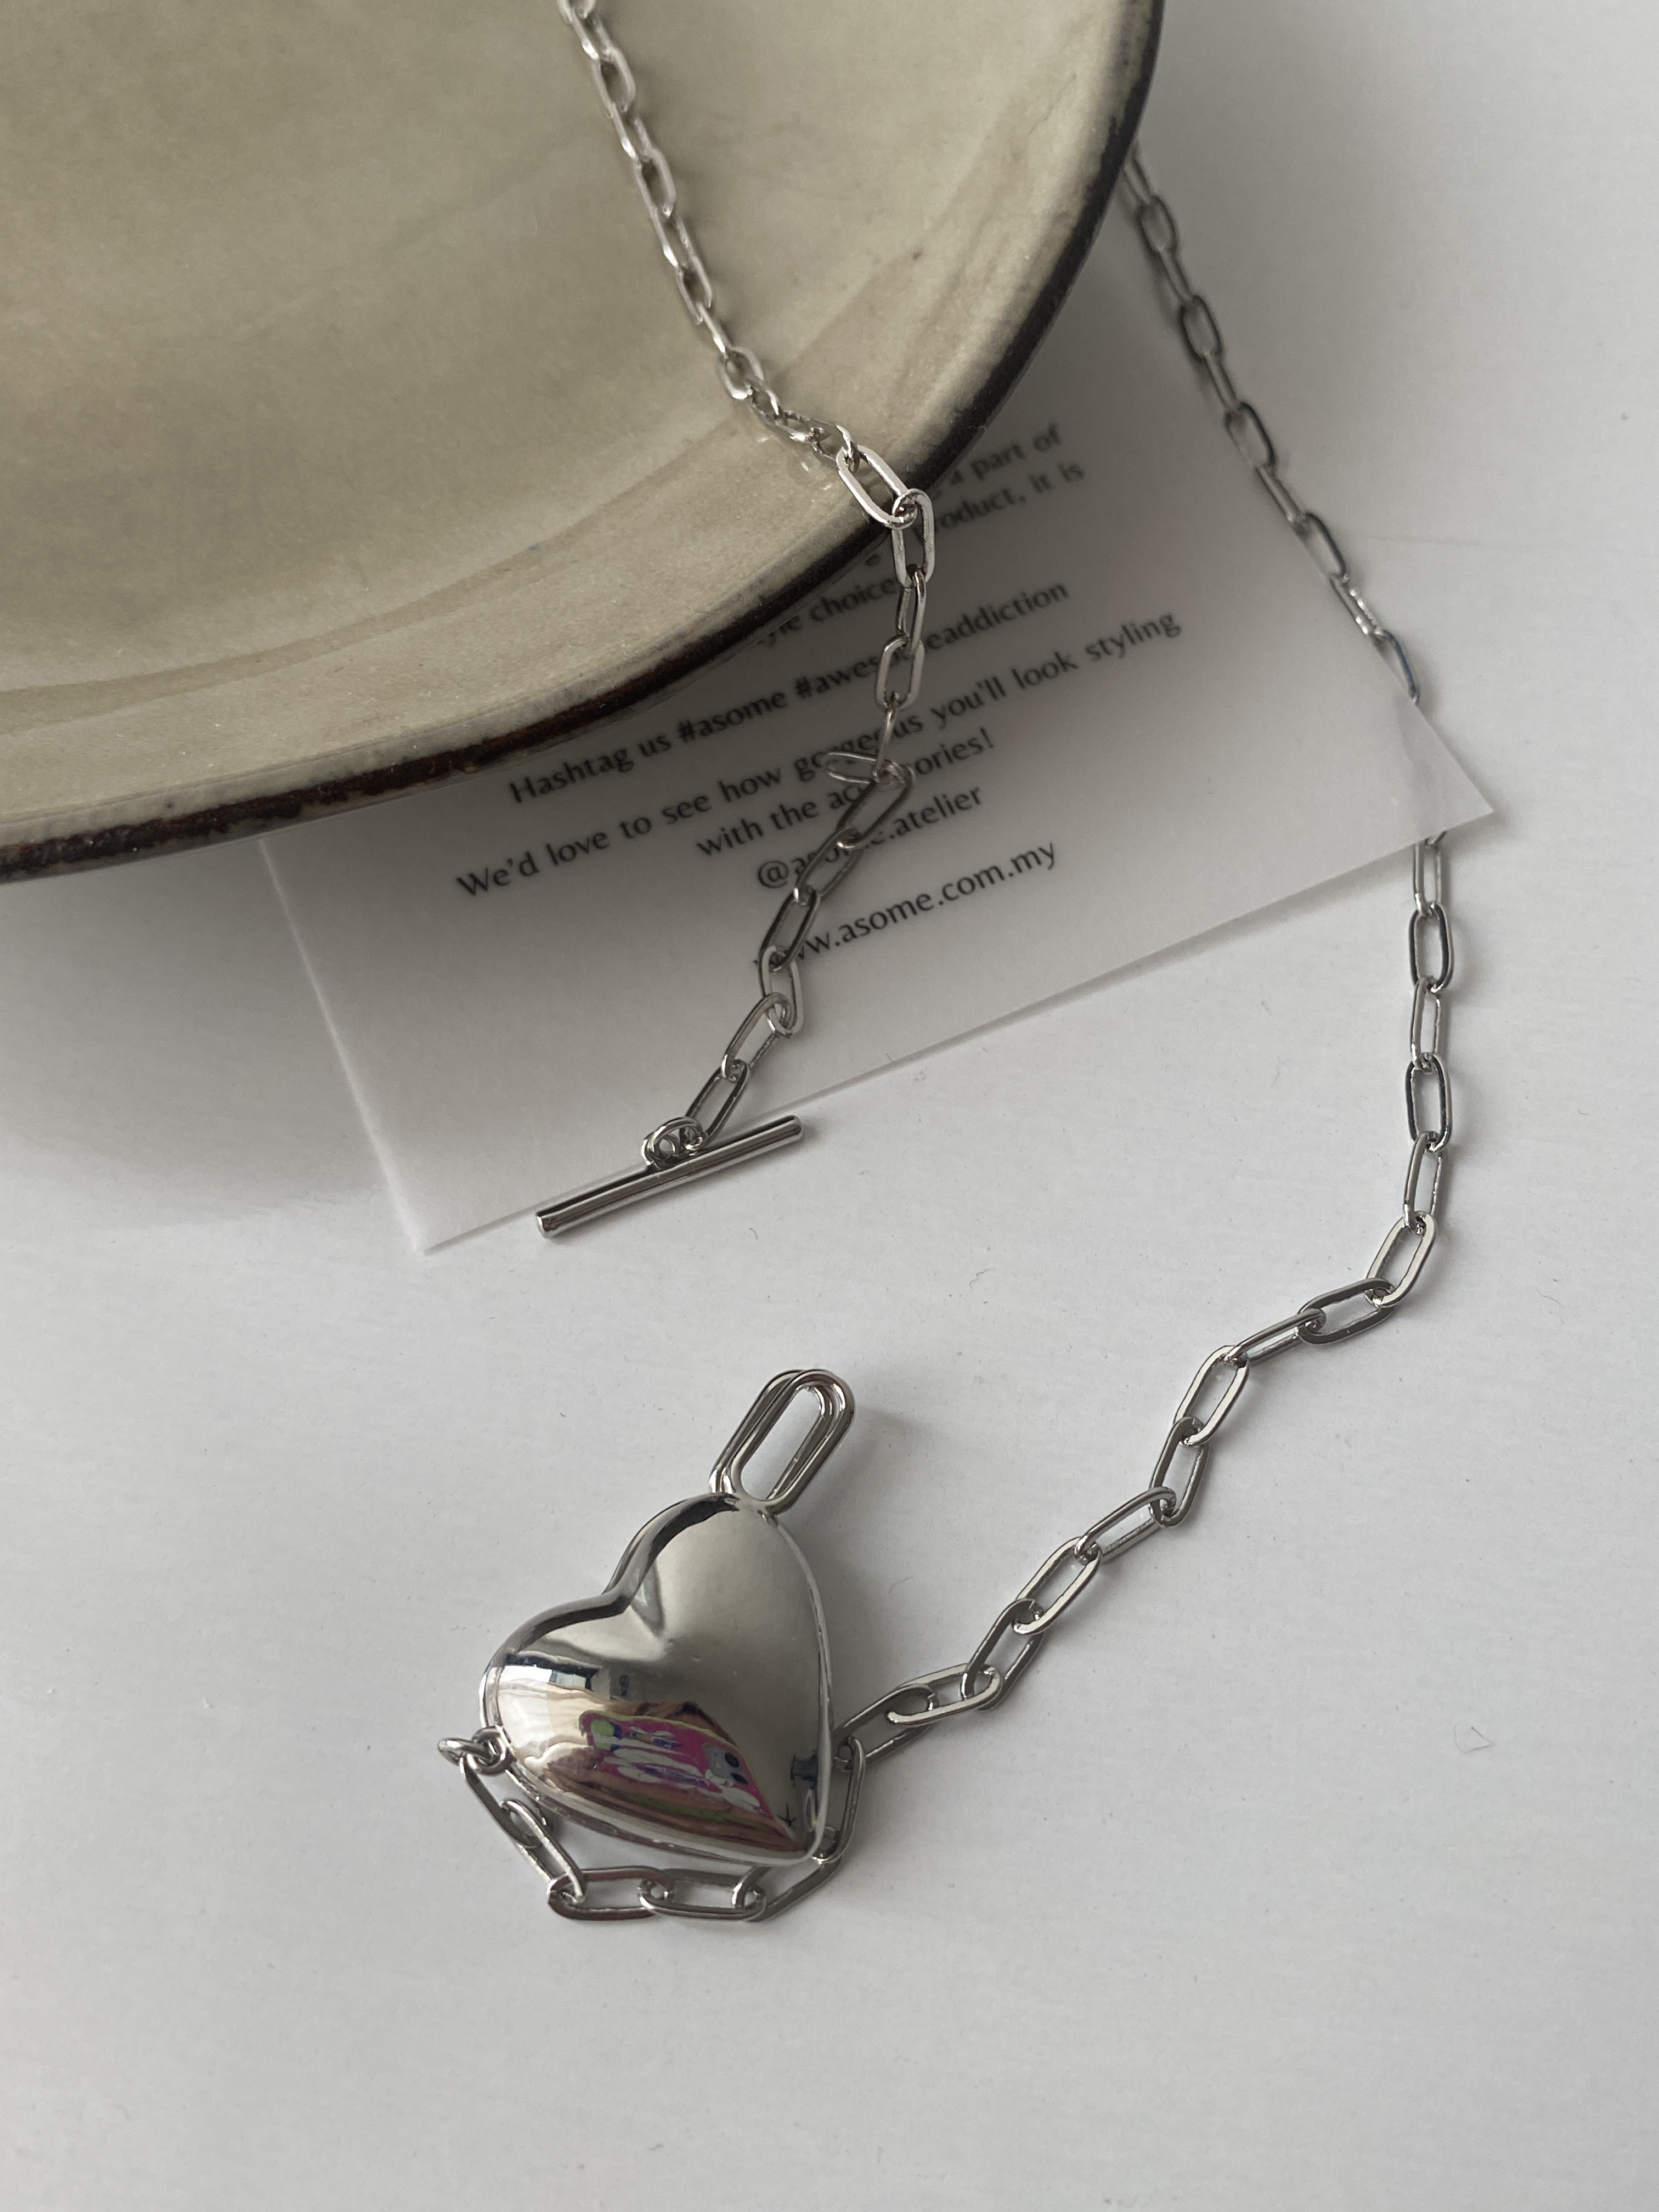 1 Heart pendant necklace